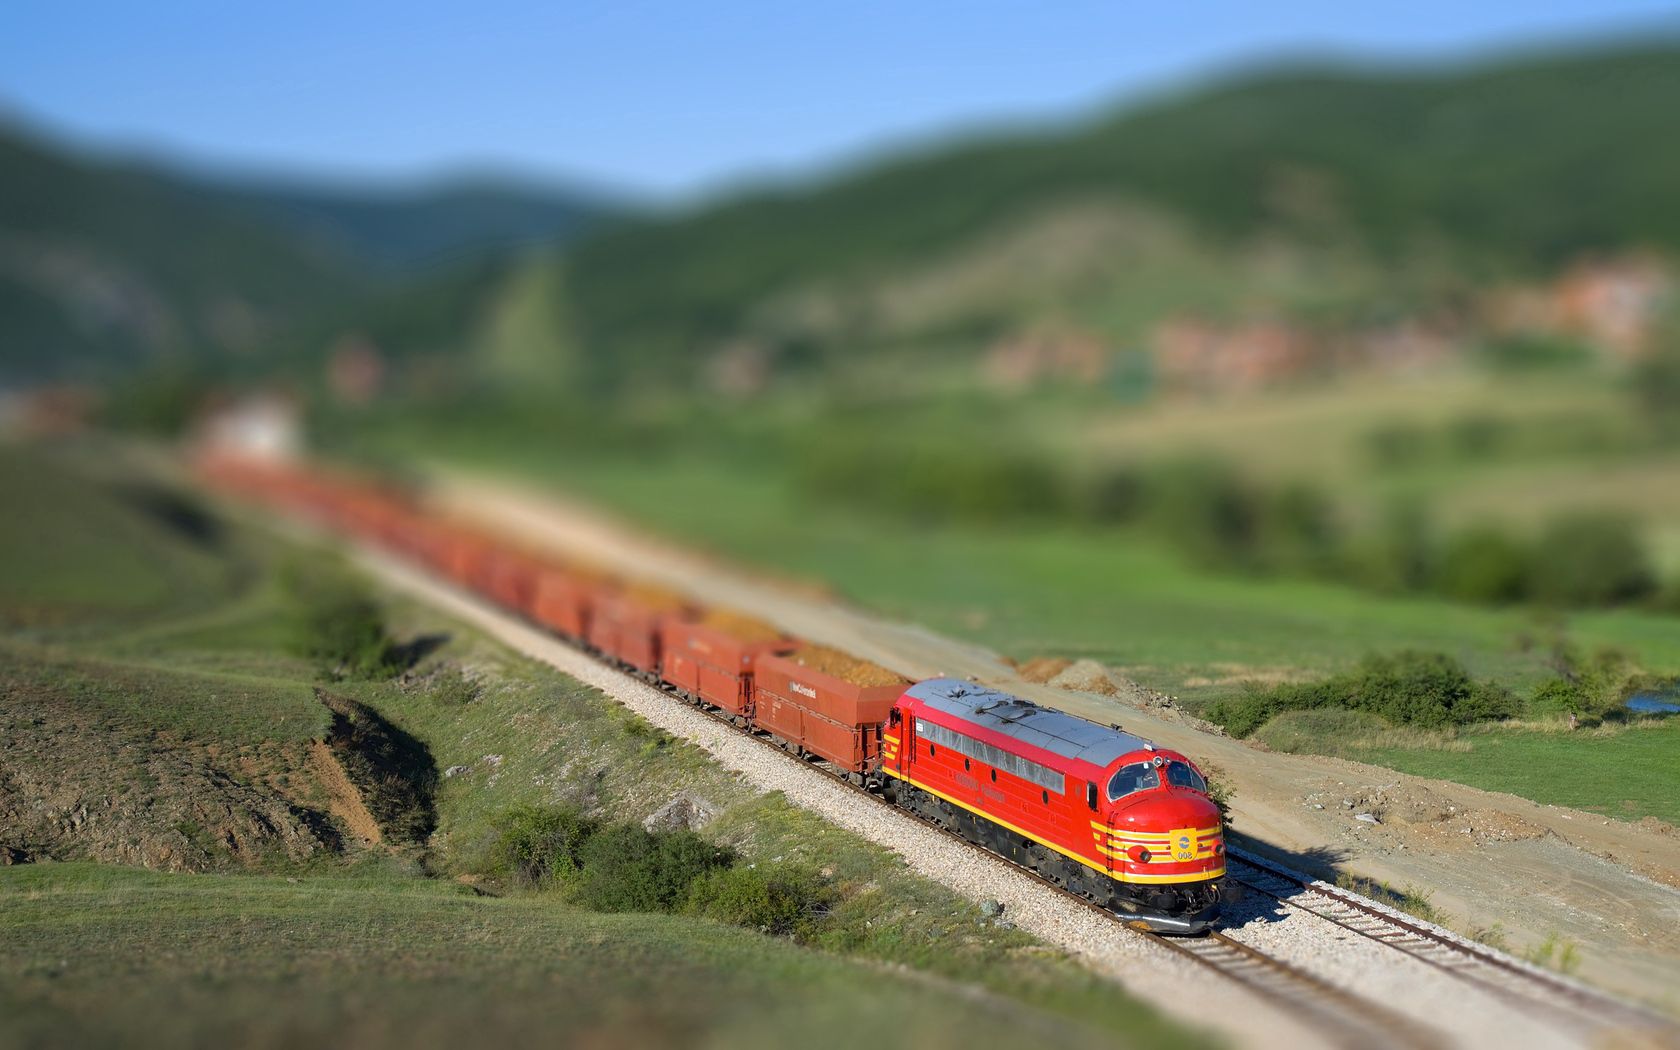 movement, miscellaneous, train, nature, miscellanea, traffic, railway High Definition image